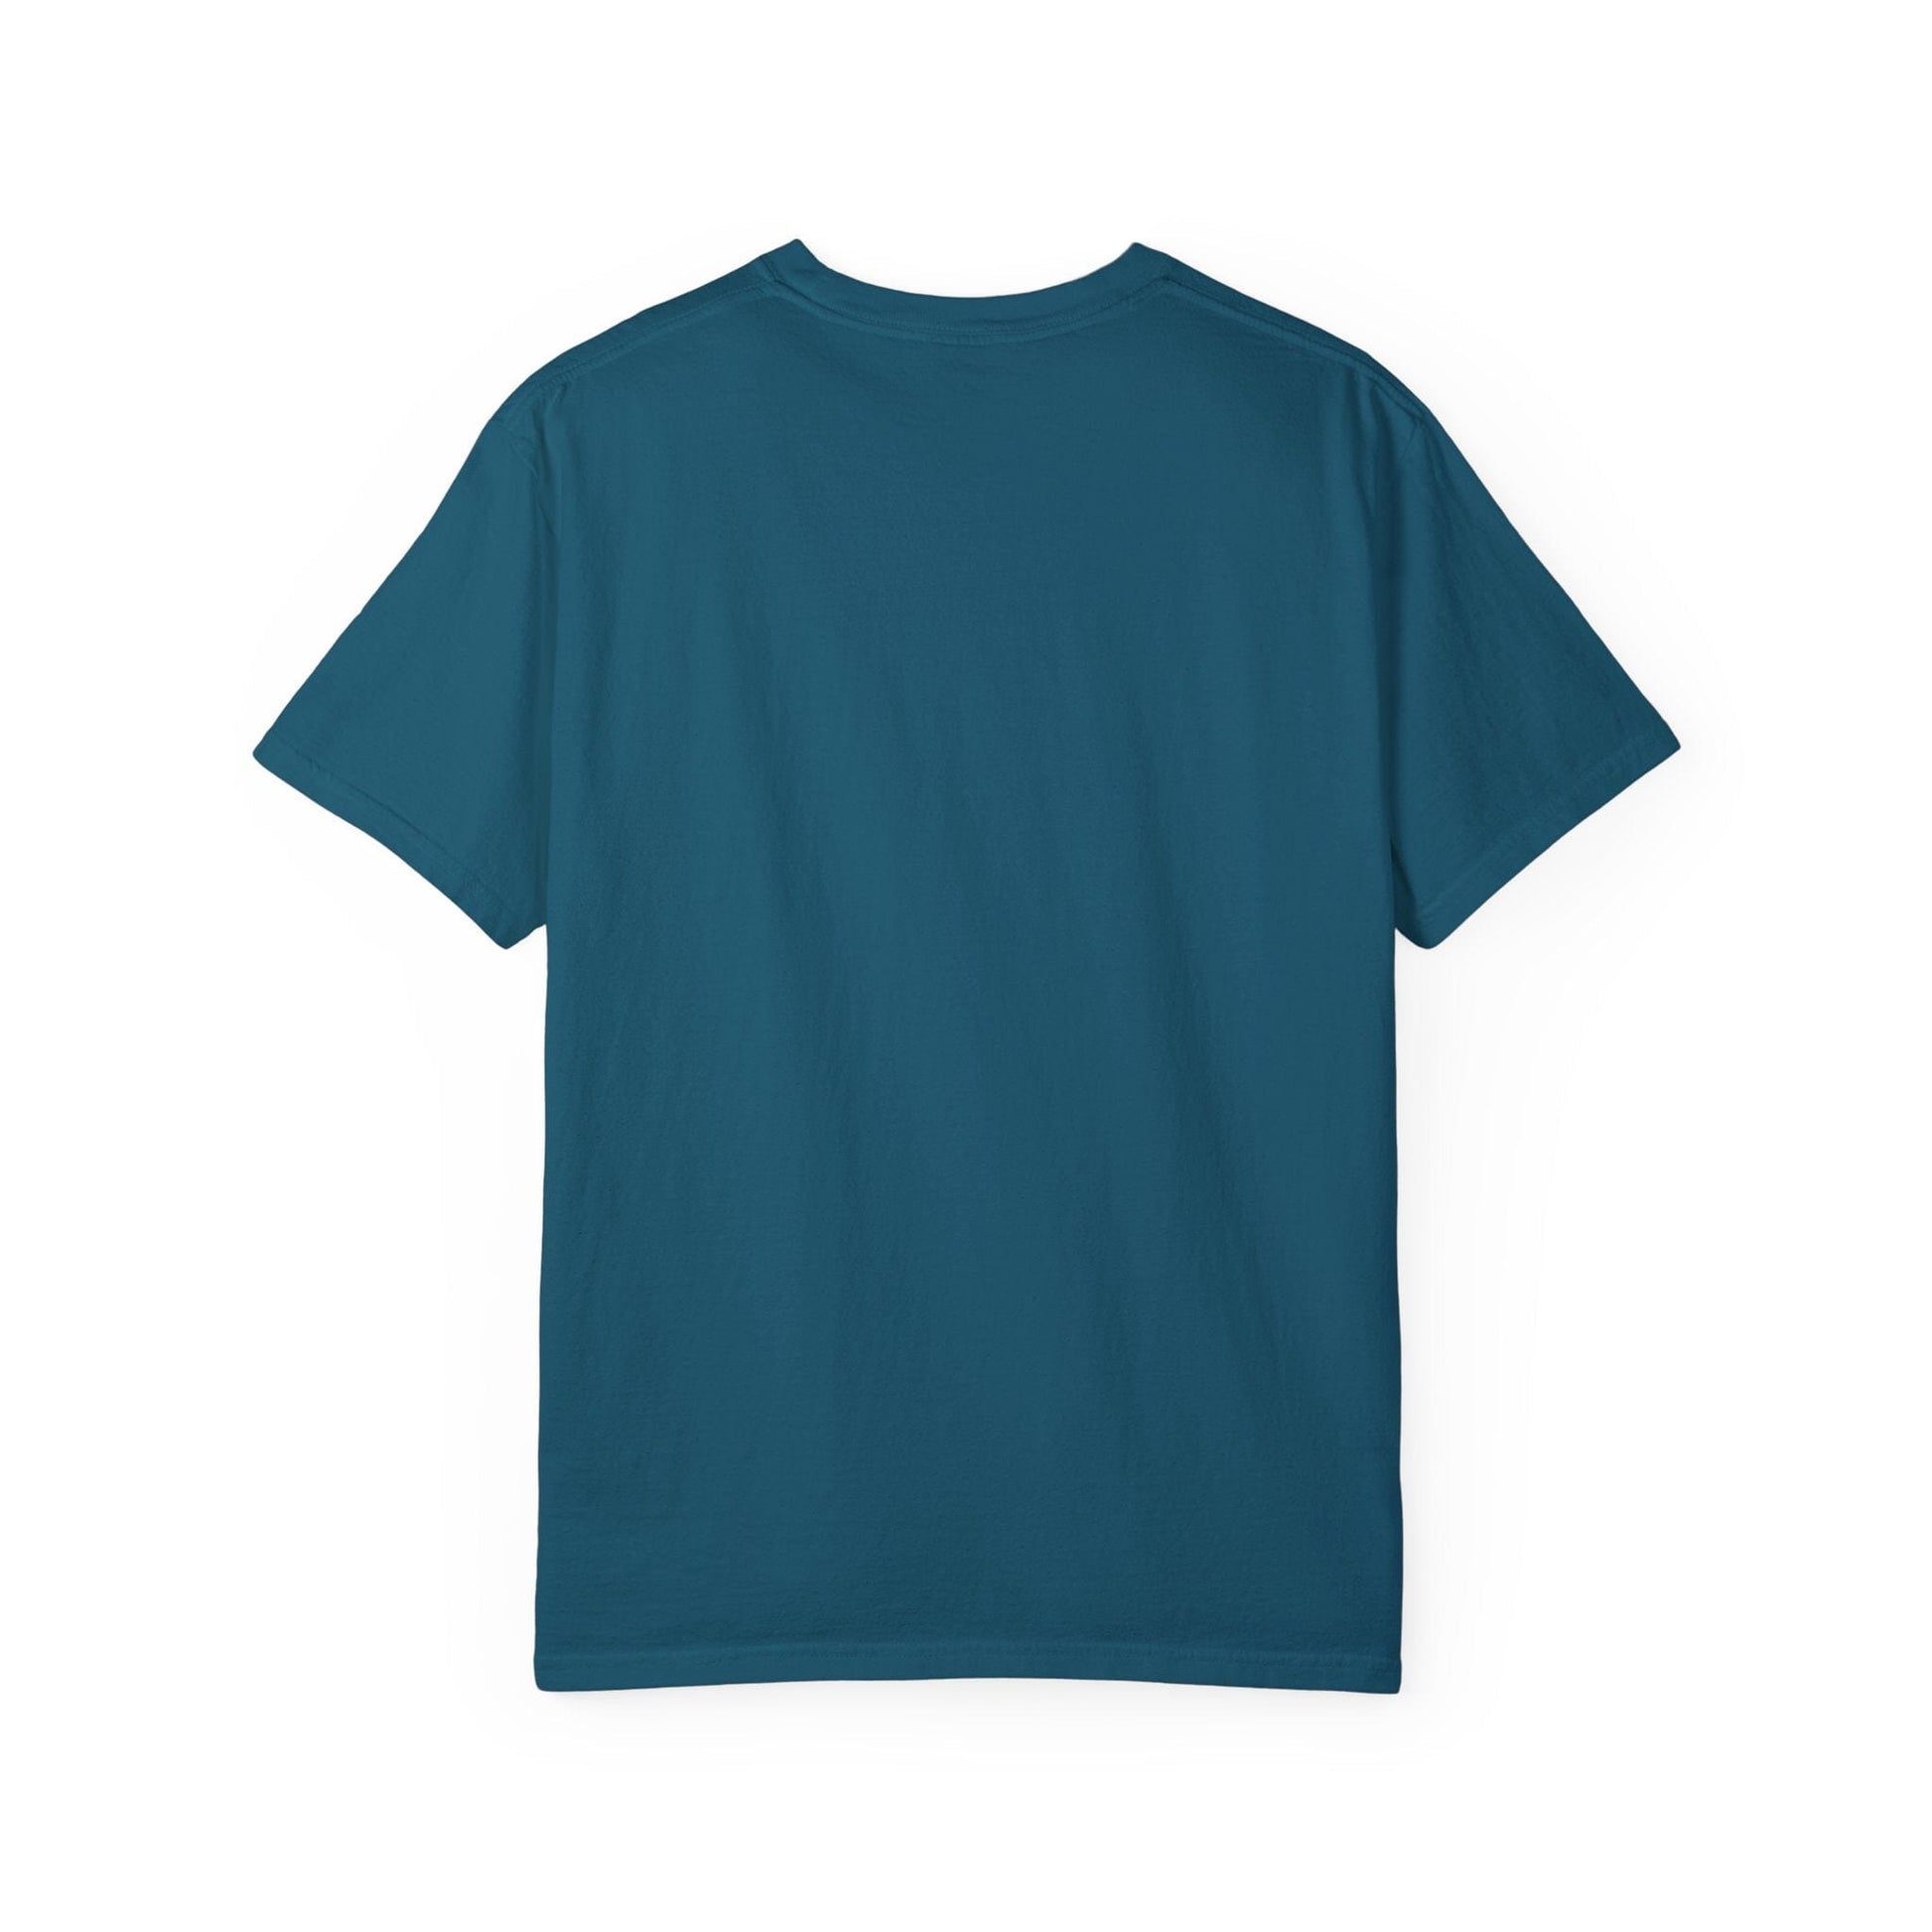 Mermaidcore Aloha Beaches Shirt, Coconut Girl Aesthetic, Ocean Inspired Style, VSCO Clothing, Y2K Shirts, Teenage Girl Gift T-Shirt Printify 